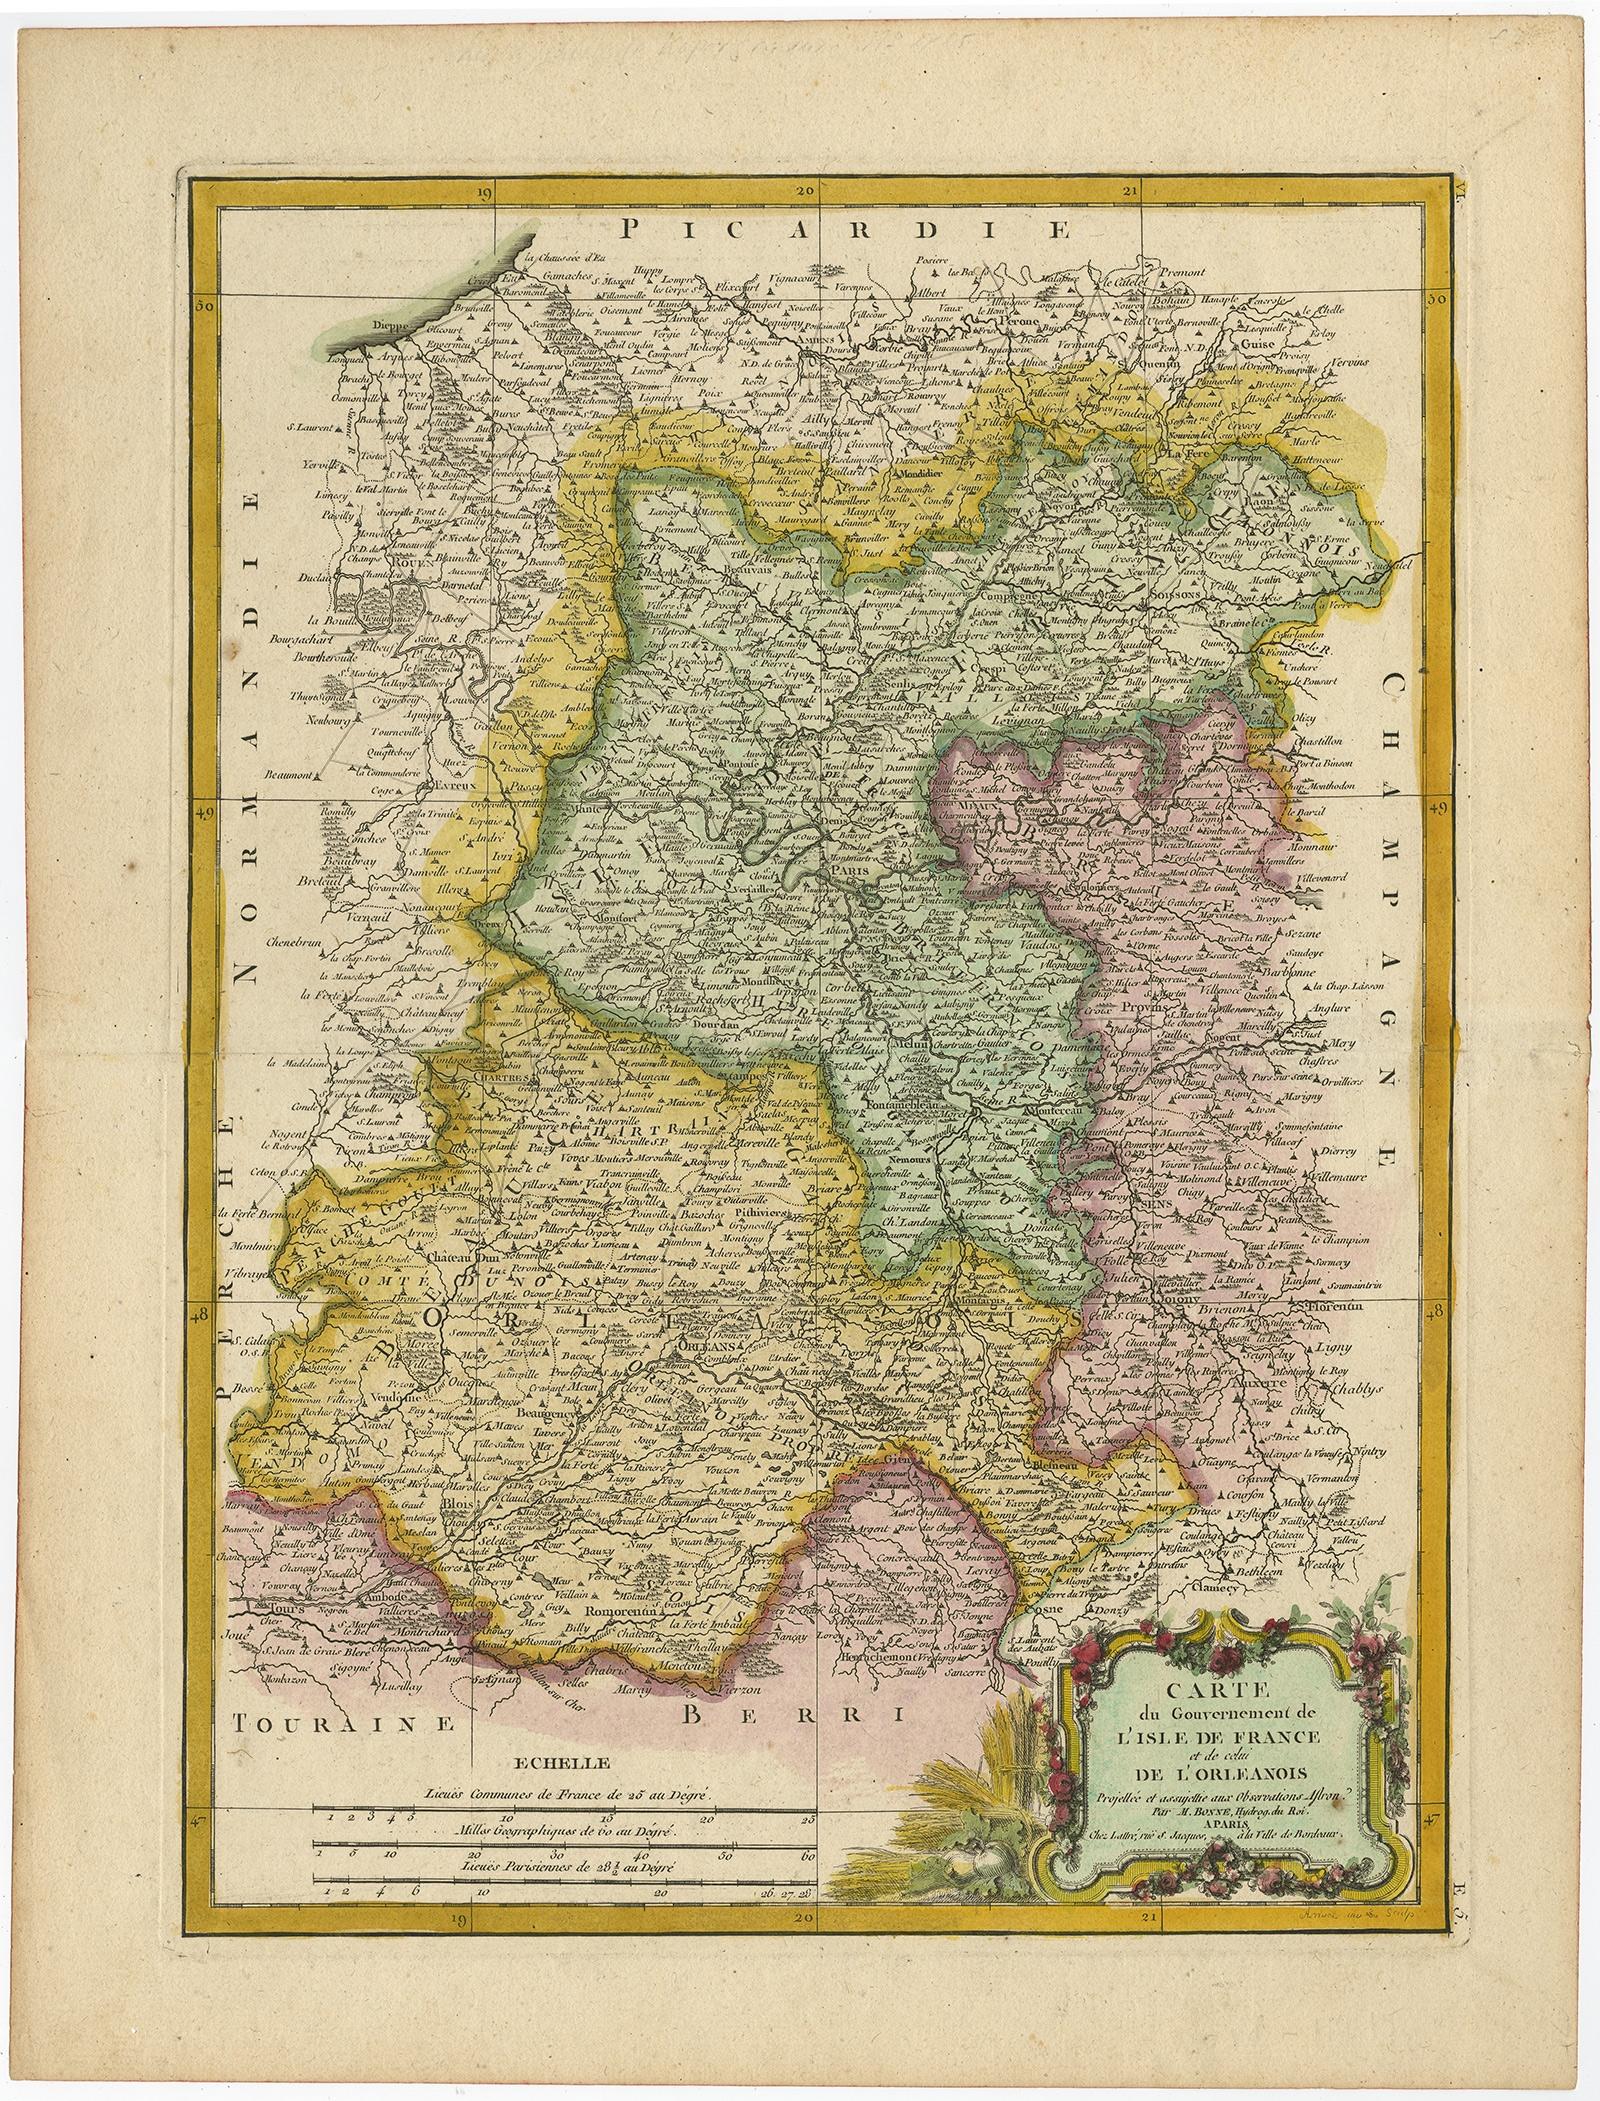 Antique map titled 'Carte du Gouvernment de L'Isle de France et de edlui de L'Orleanois (..).' 

A fine example of Rigobert Bonne's c. 1780 decorative map of the French regions of Isle de France and Orleans. Covers the region in full from Picardie